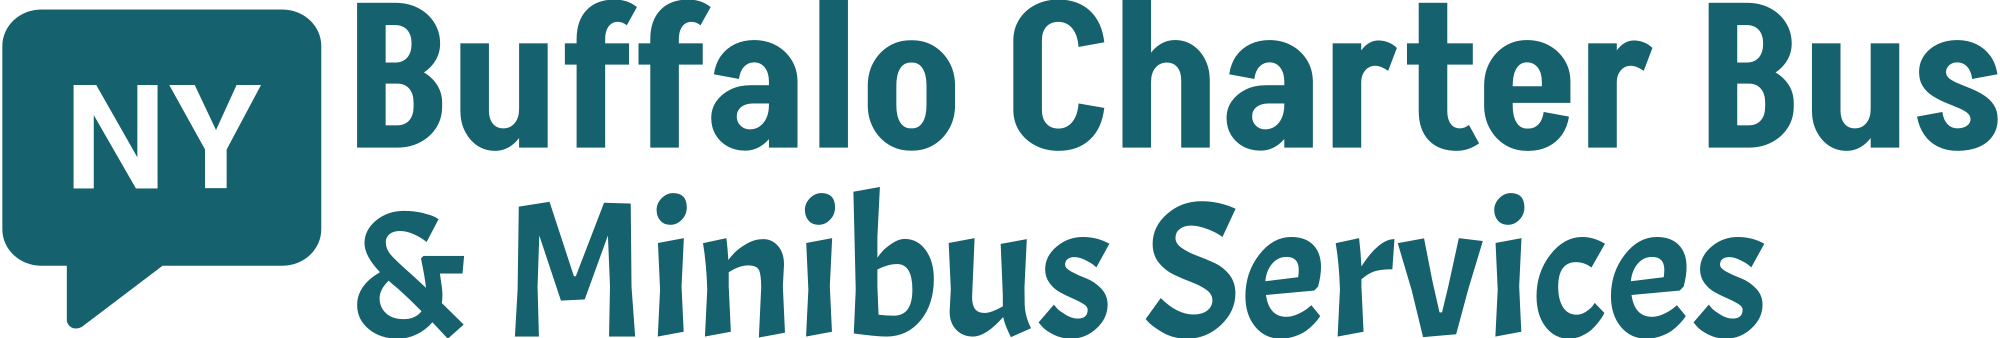 Charter Buses Buffalo logo